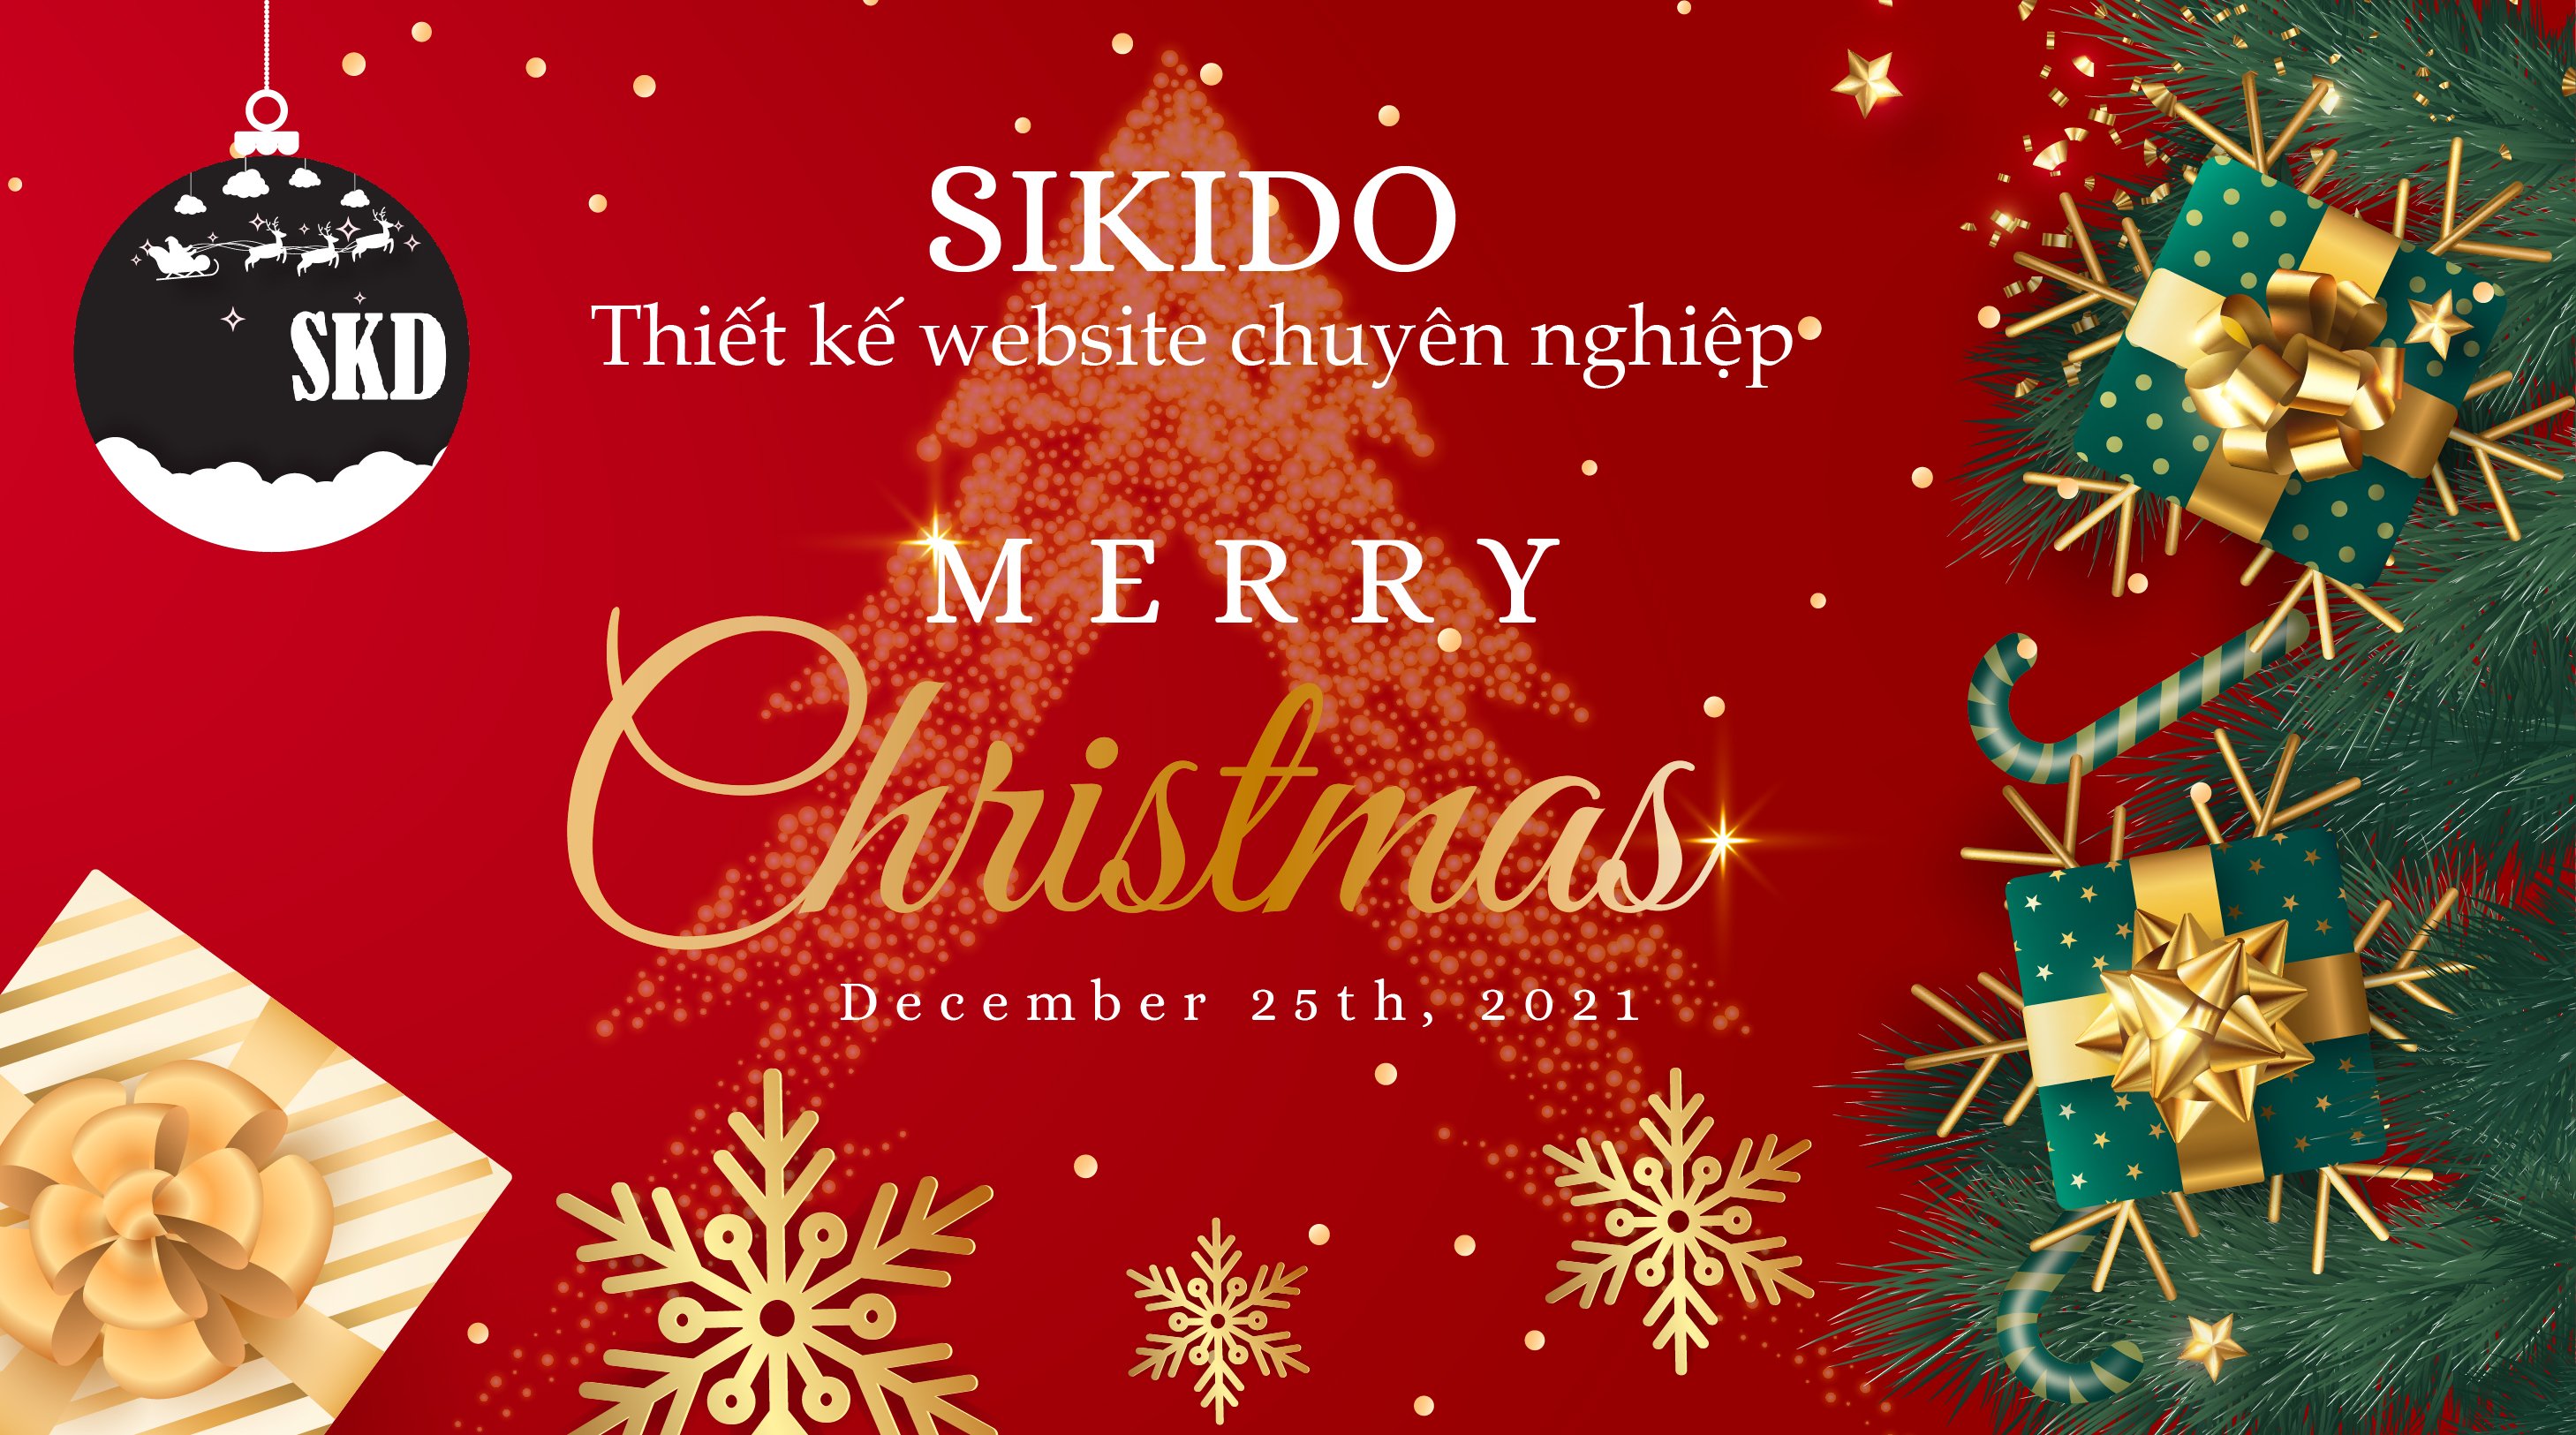 Sikido - Merry Christmas 2021